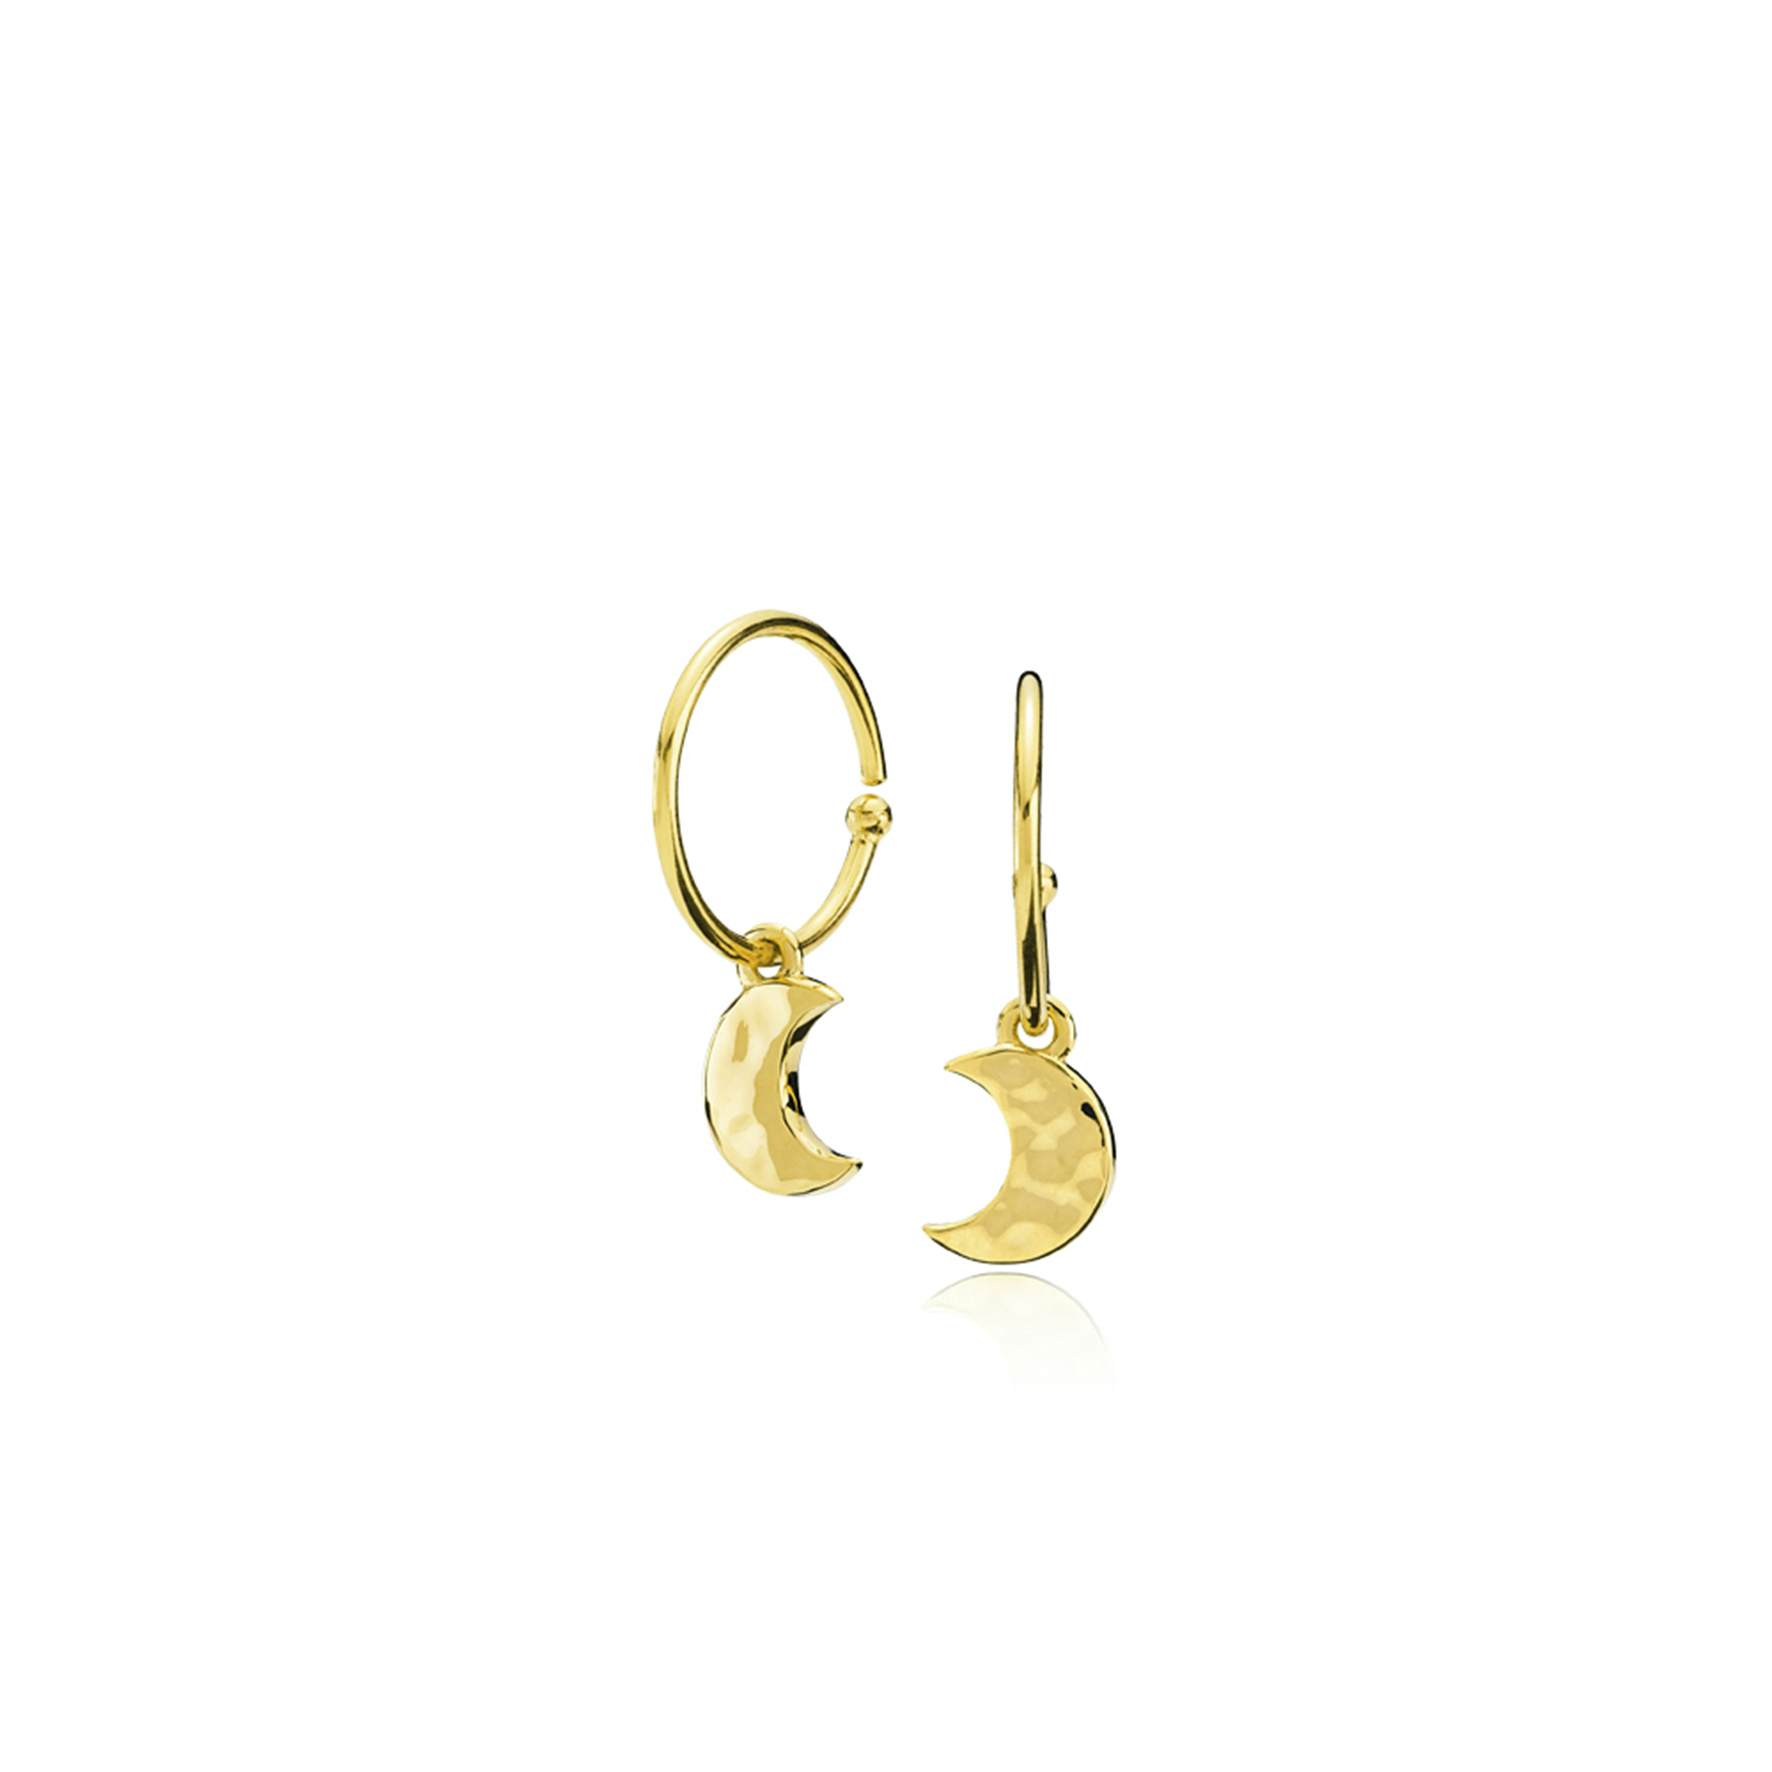 Bella Dream By Sistie Earrings from Sistie in Goldplated-Silver Sterling 925